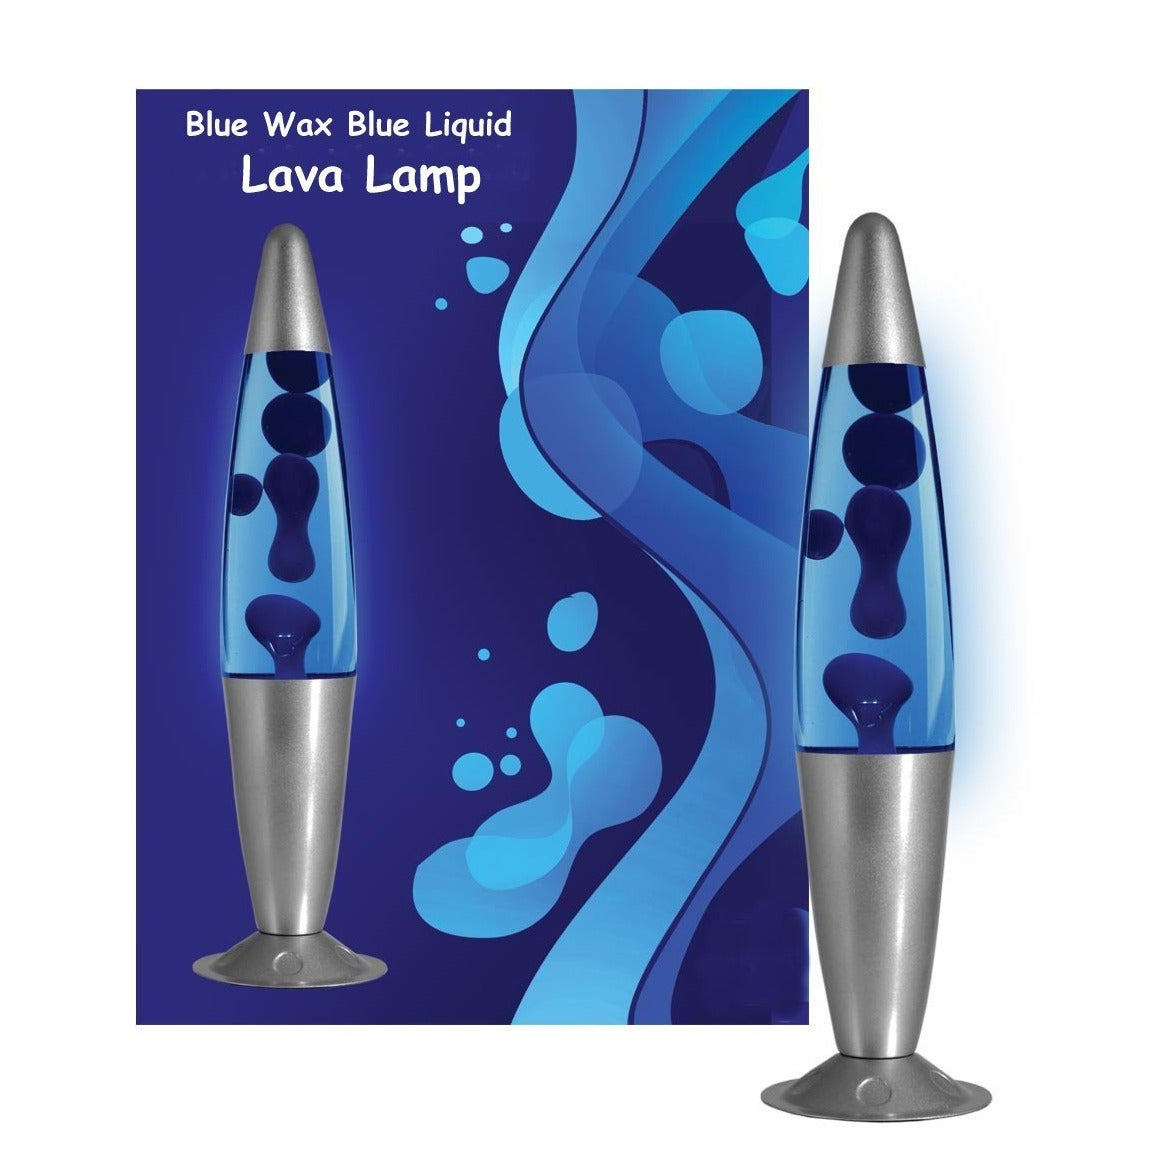 Green Liquid Lava Lamp 34 Cm freeshipping - Dealz4all Store